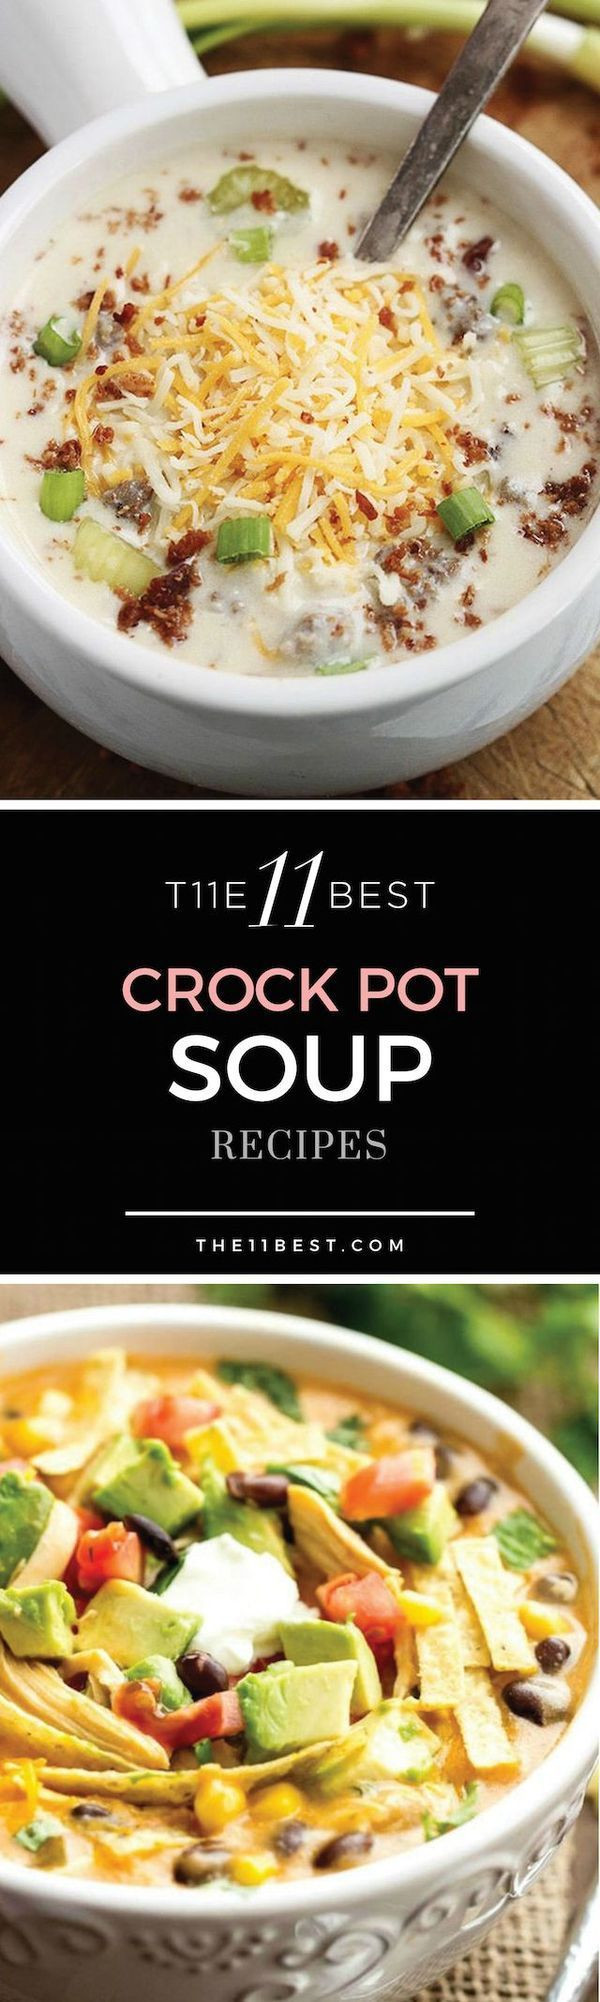 Healthy Crockpot Dinners
 The 11 Best Crock Pot Soup Recipes